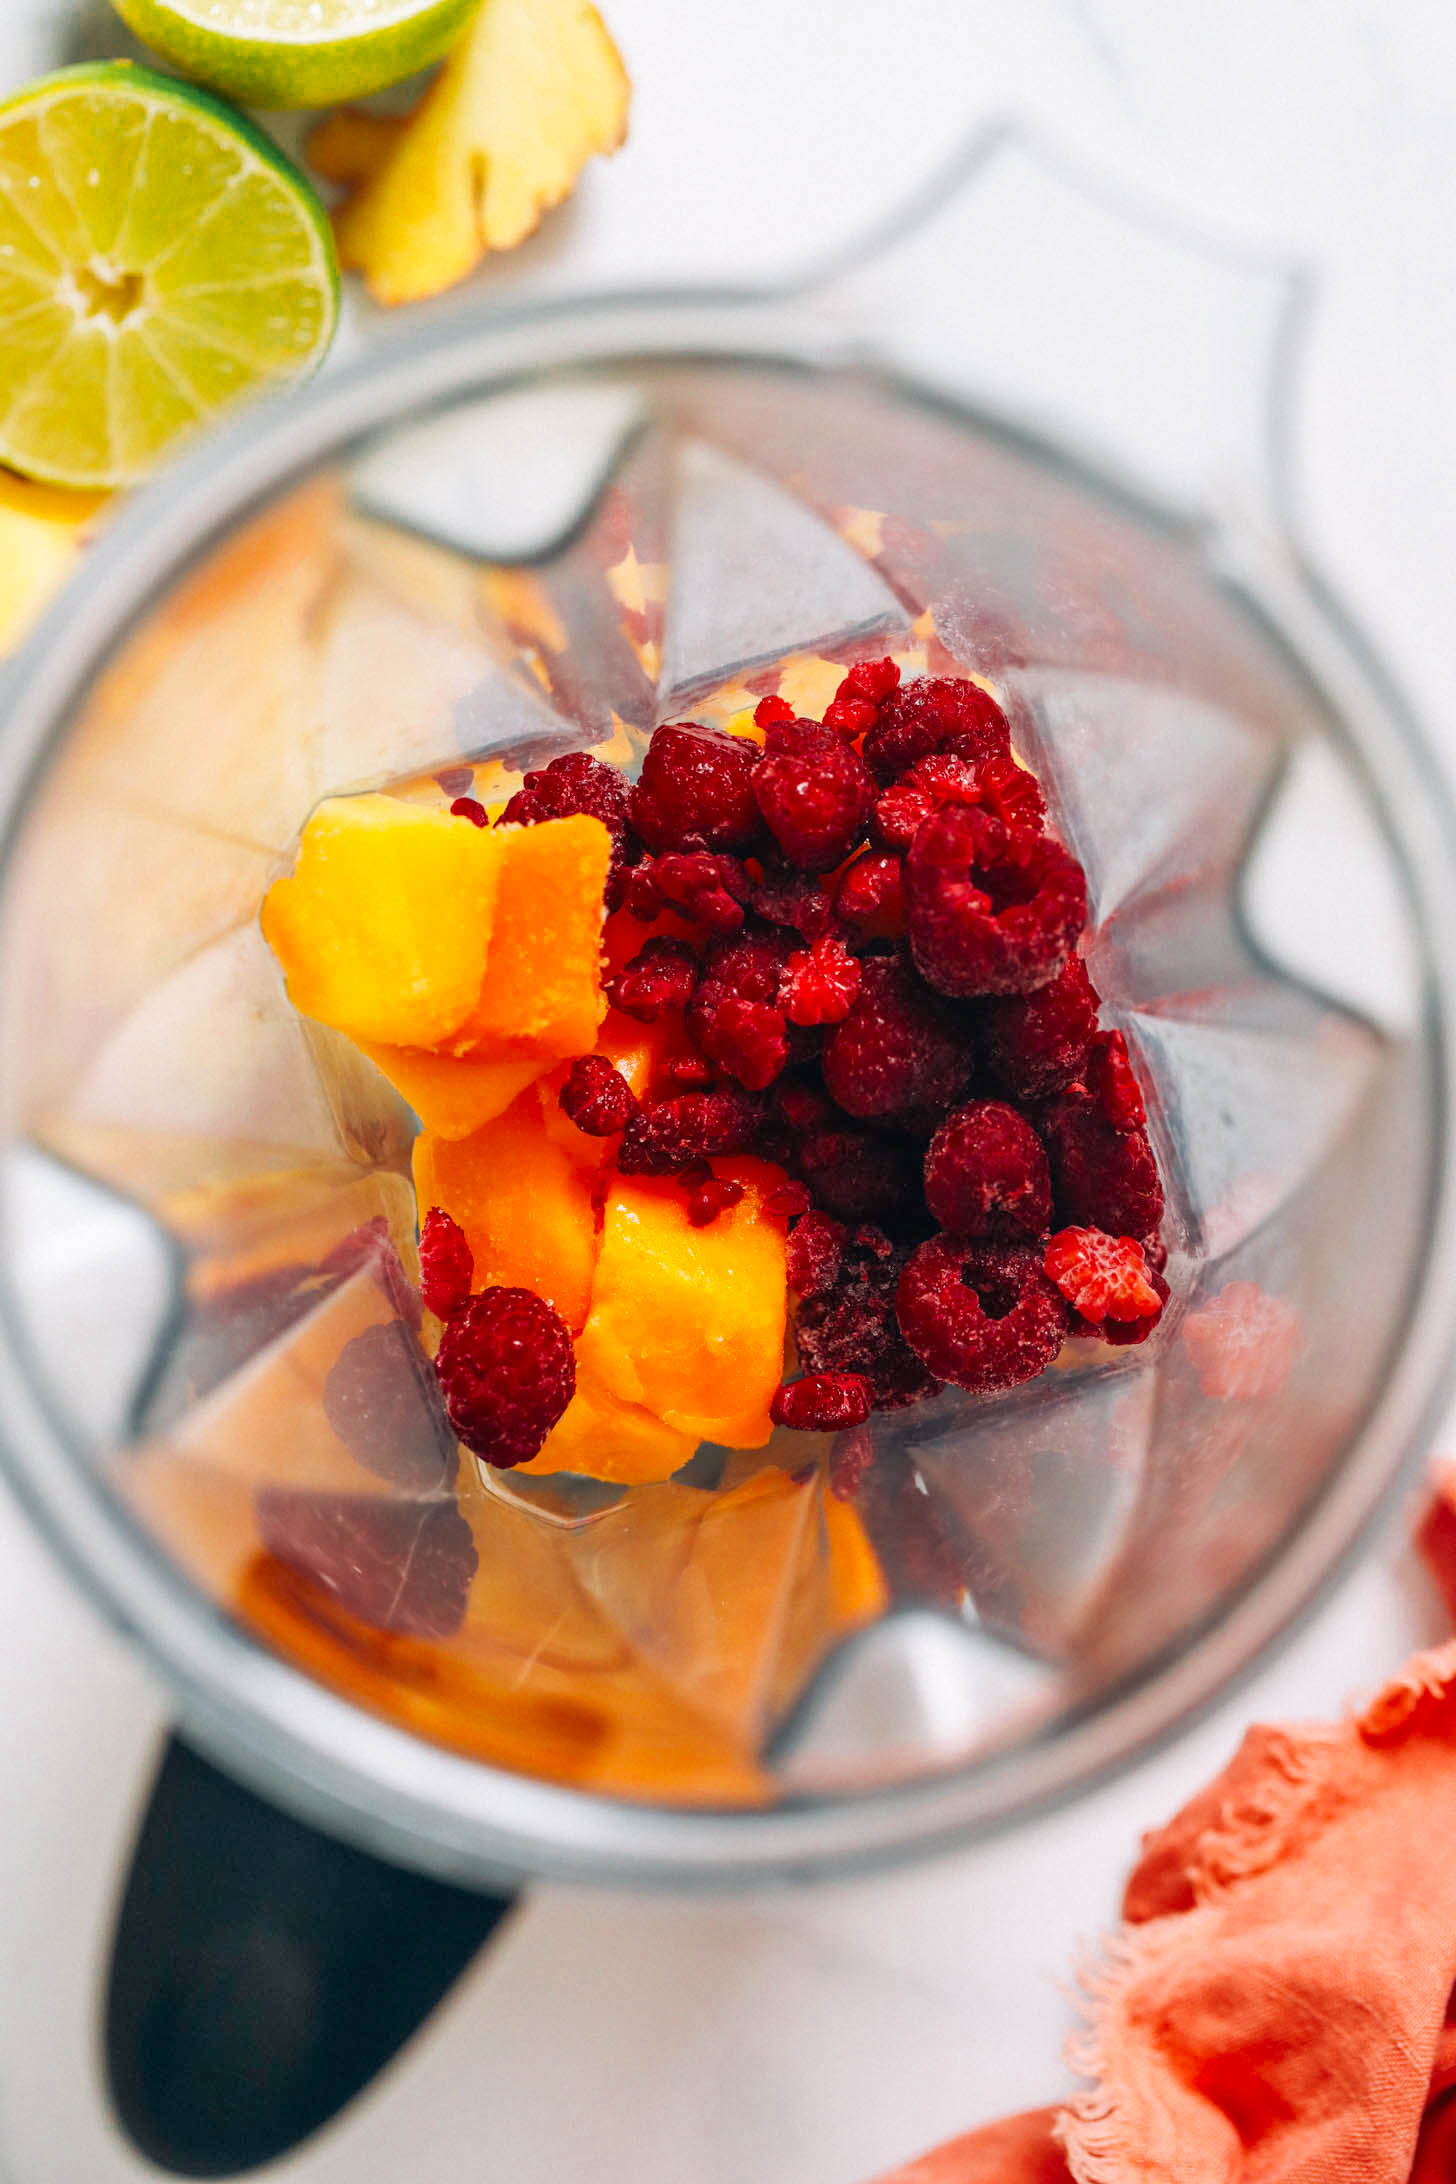 Frozen mango and raspberries in a blender